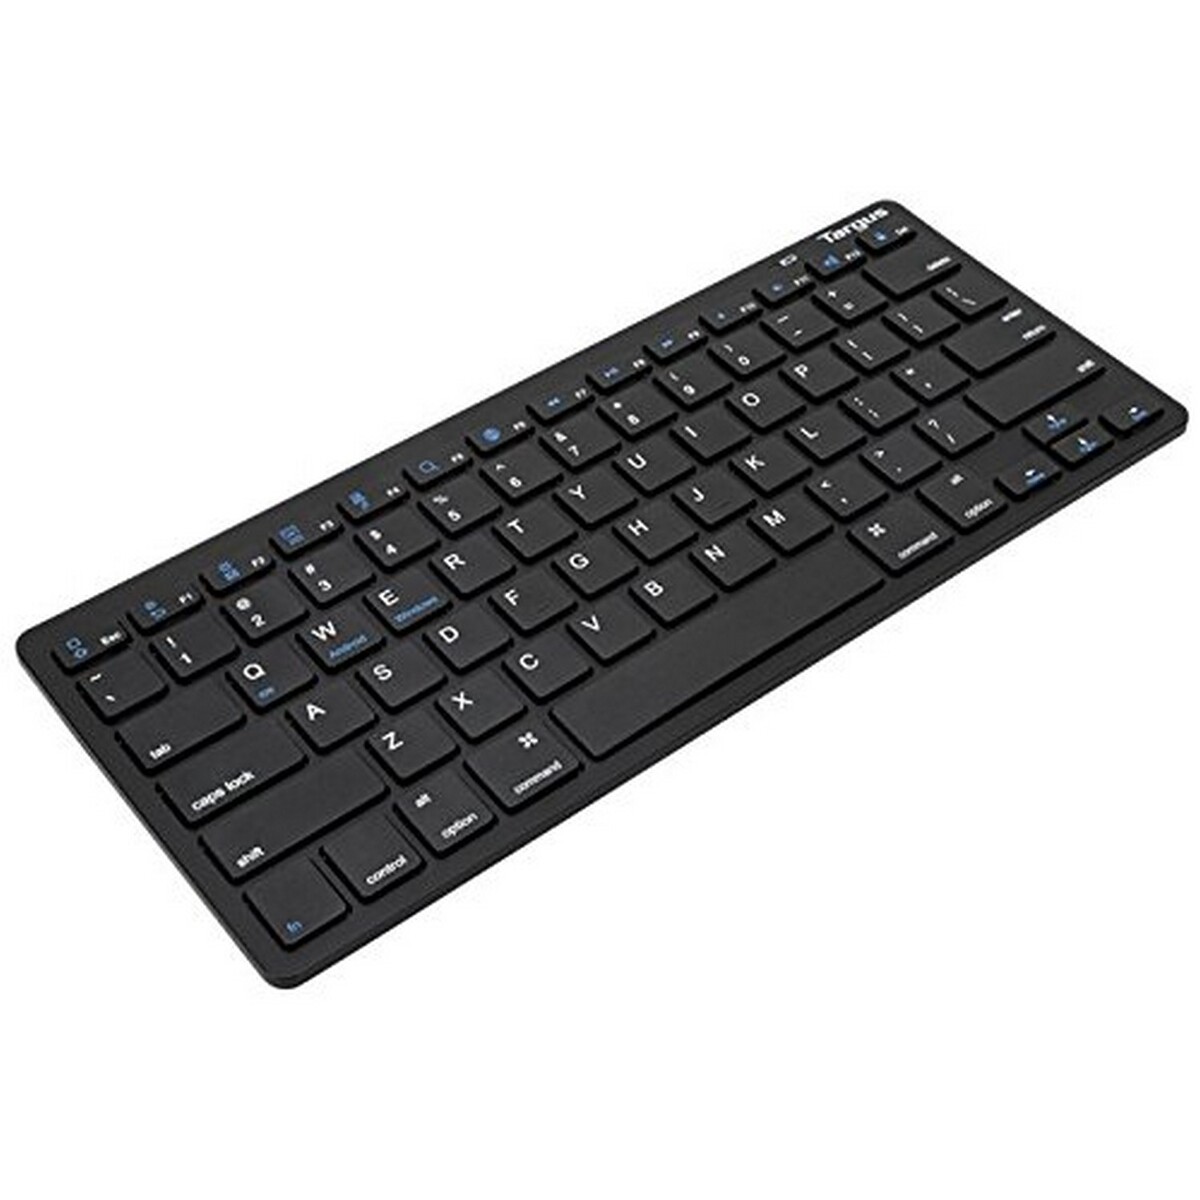 Targus Wireless Keyboard KB55